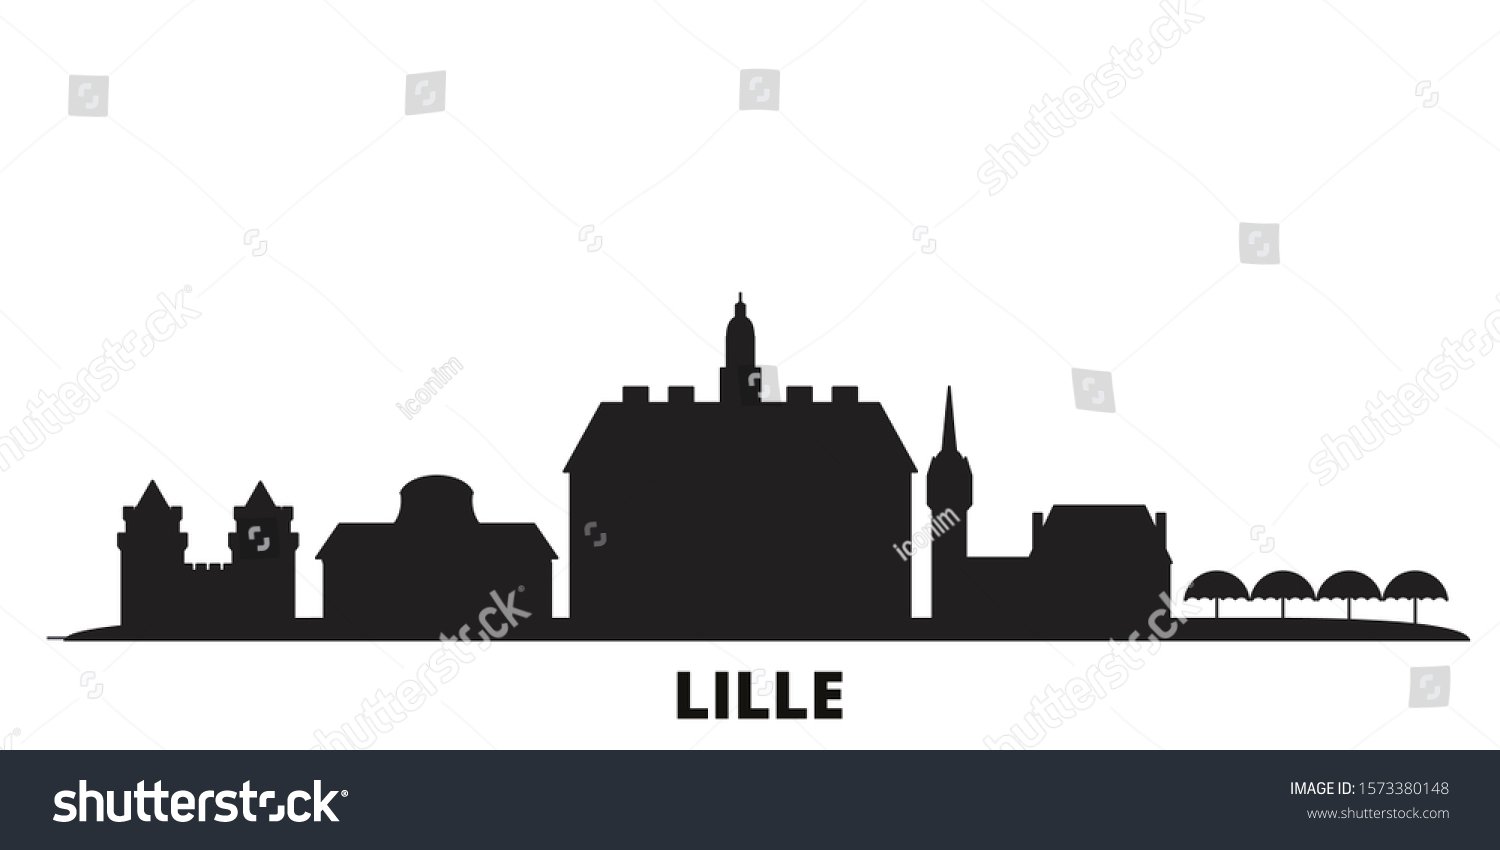 SVG of France, Lille city skyline isolated vector illustration. France, Lille travel black cityscape svg